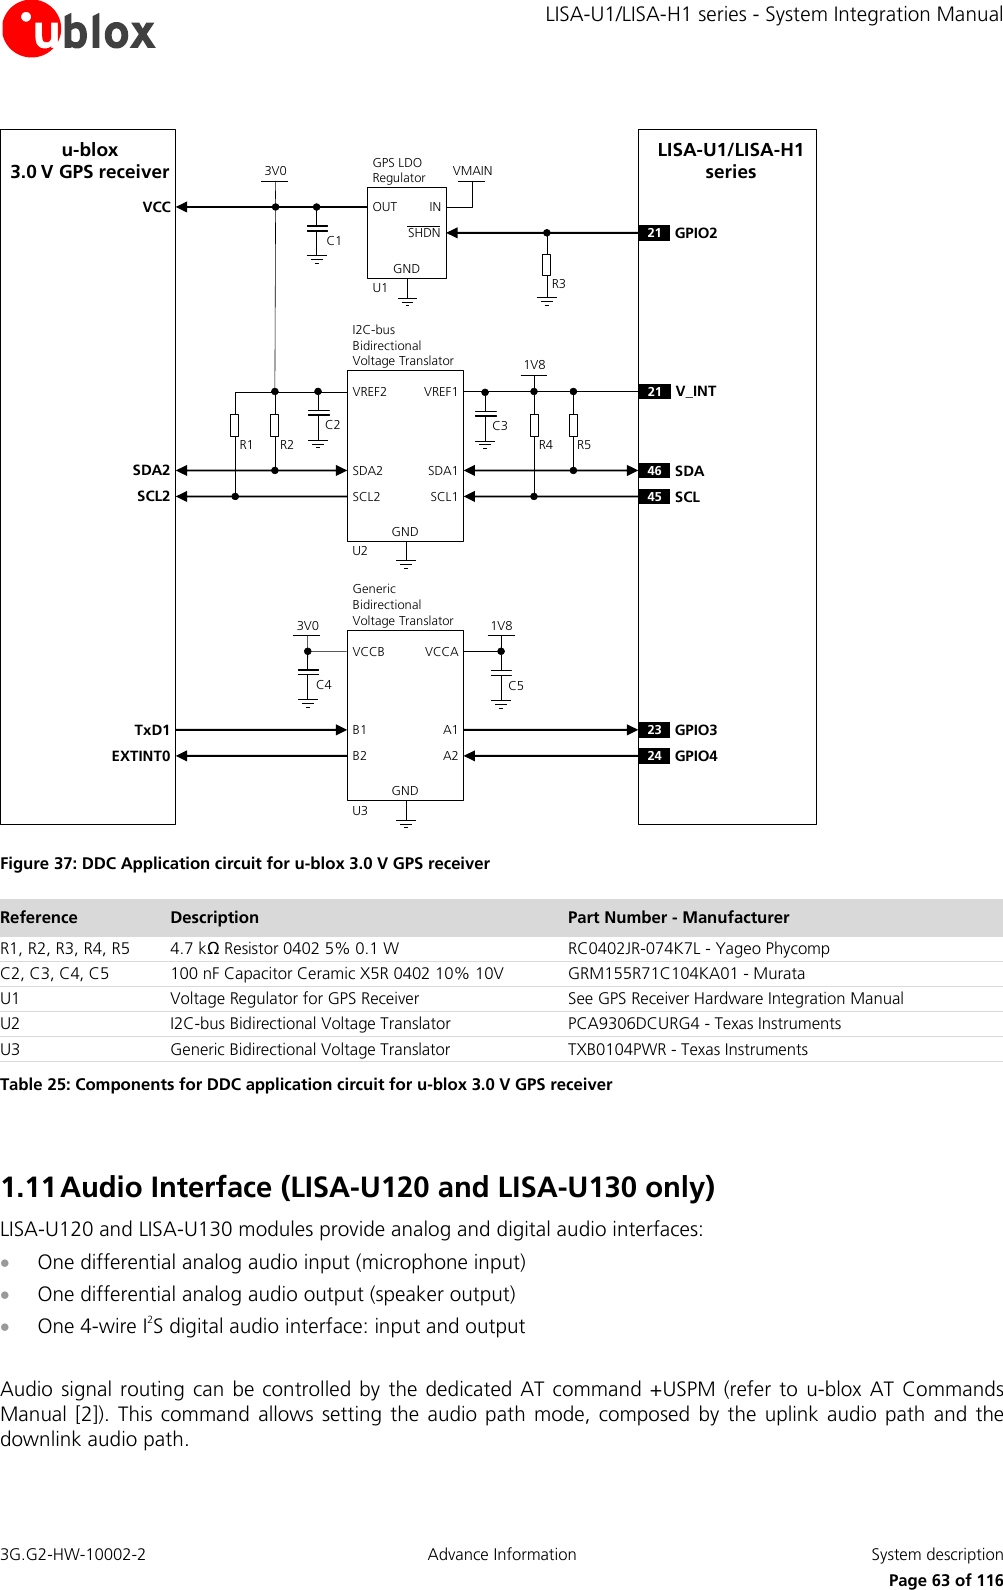     LISA-U1/LISA-H1 series - System Integration Manual 3G.G2-HW-10002-2  Advance Information  System description      Page 63 of 116 LISA-U1/LISA-H1 seriesR1INOUTGNDGPS LDORegulatorSHDNu-blox3.0 V GPS receiverR2VMAIN3V0U121 GPIO246 SDA45 SCLR4 R51V8SDA1 SDA2GNDU2SCL1SCL2VREF1VREF2I2C-busBidirectional Voltage Translator21 V_INTC1C2 C3R323 GPIO324 GPIO41V8A1 B1GNDU3A2B2VCCAVCCBGenericBidirectional Voltage TranslatorC4 C53V0SDA2SCL2TxD1EXTINT0VCC Figure 37: DDC Application circuit for u-blox 3.0 V GPS receiver Reference Description Part Number - Manufacturer R1, R2, R3, R4, R5 4.7 kΩ Resistor 0402 5% 0.1 W  RC0402JR-074K7L - Yageo Phycomp C2, C3, C4, C5 100 nF Capacitor Ceramic X5R 0402 10% 10V GRM155R71C104KA01 - Murata U1 Voltage Regulator for GPS Receiver See GPS Receiver Hardware Integration Manual U2 I2C-bus Bidirectional Voltage Translator PCA9306DCURG4 - Texas Instruments U3 Generic Bidirectional Voltage Translator TXB0104PWR - Texas Instruments Table 25: Components for DDC application circuit for u-blox 3.0 V GPS receiver  1.11 Audio Interface (LISA-U120 and LISA-U130 only) LISA-U120 and LISA-U130 modules provide analog and digital audio interfaces:  One differential analog audio input (microphone input)  One differential analog audio output (speaker output)  One 4-wire I2S digital audio interface: input and output  Audio signal routing can  be  controlled by  the dedicated AT command +USPM (refer  to  u-blox AT Commands Manual  [2]).  This command  allows setting  the audio path mode,  composed  by the  uplink audio  path  and the downlink audio path. 